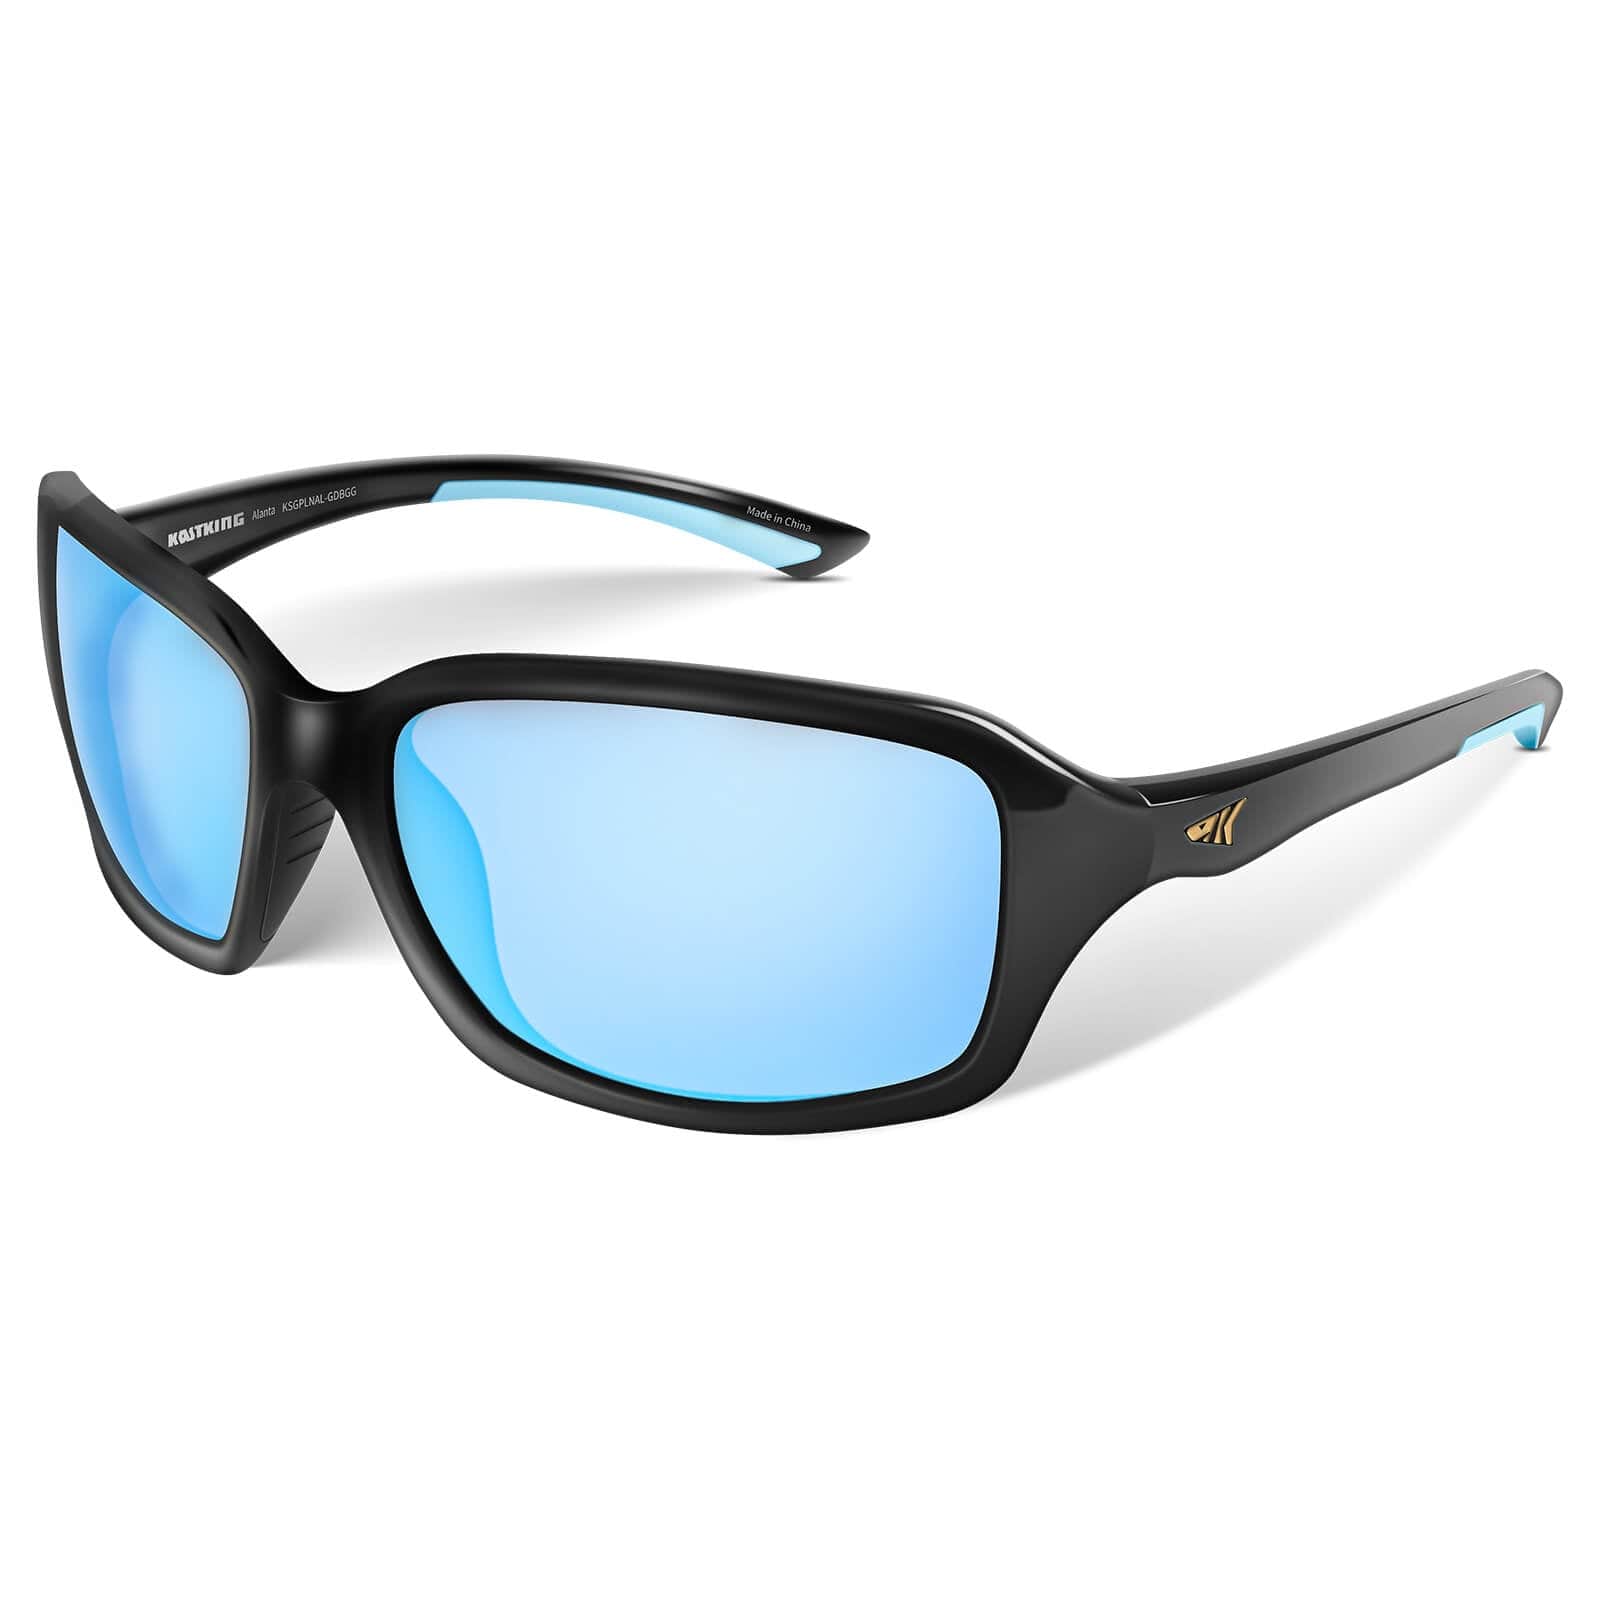 KastKing Alanta Polarized Sport Sunglasses - Gloss Smoke Crystal | Smoke -  Ice Blue Mirror